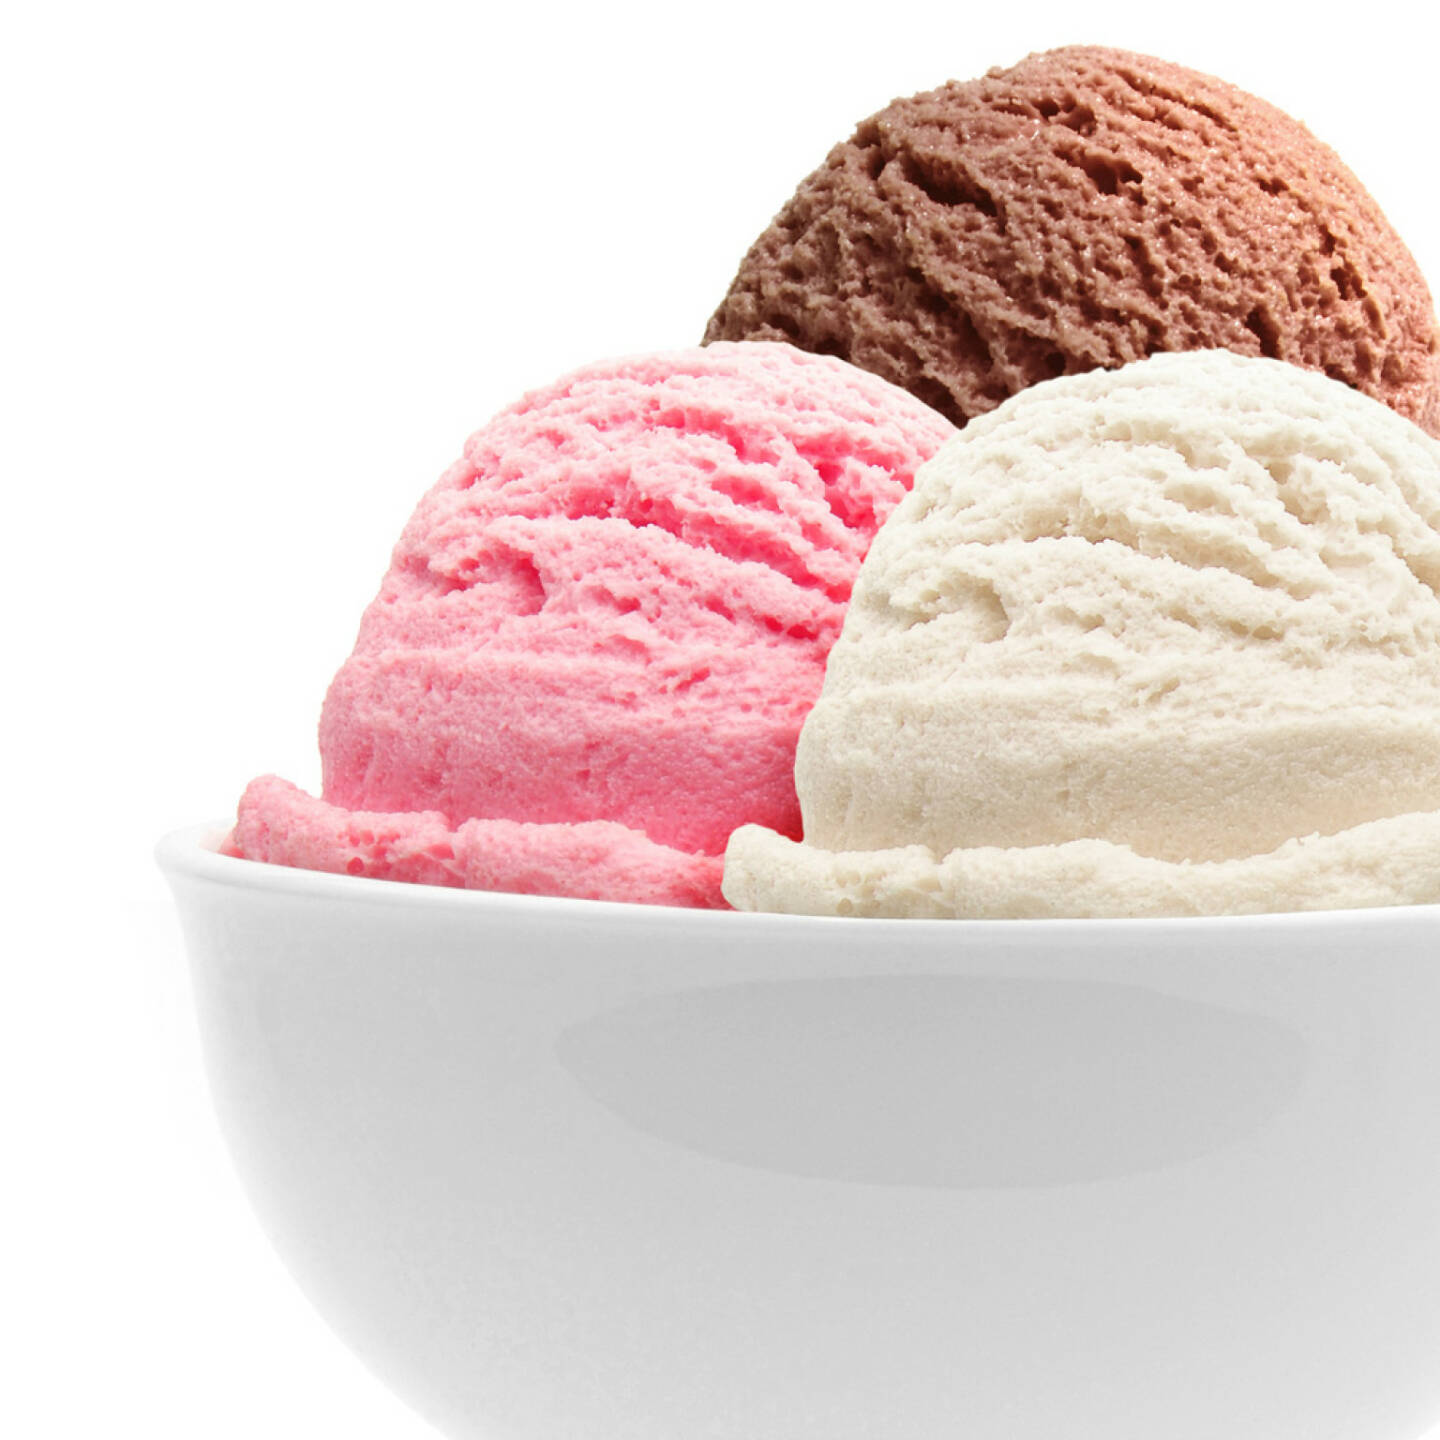 Eis, Eiscreme, süß, Sommer, kalt, Erfrischung, frieren, eiskalt, http://www.shutterstock.com/de/pic-57134731/stock-photo-ice-cream-in-bowl-with-three-scoops-of-chocolate-strawberry-and-vanilla.html? 